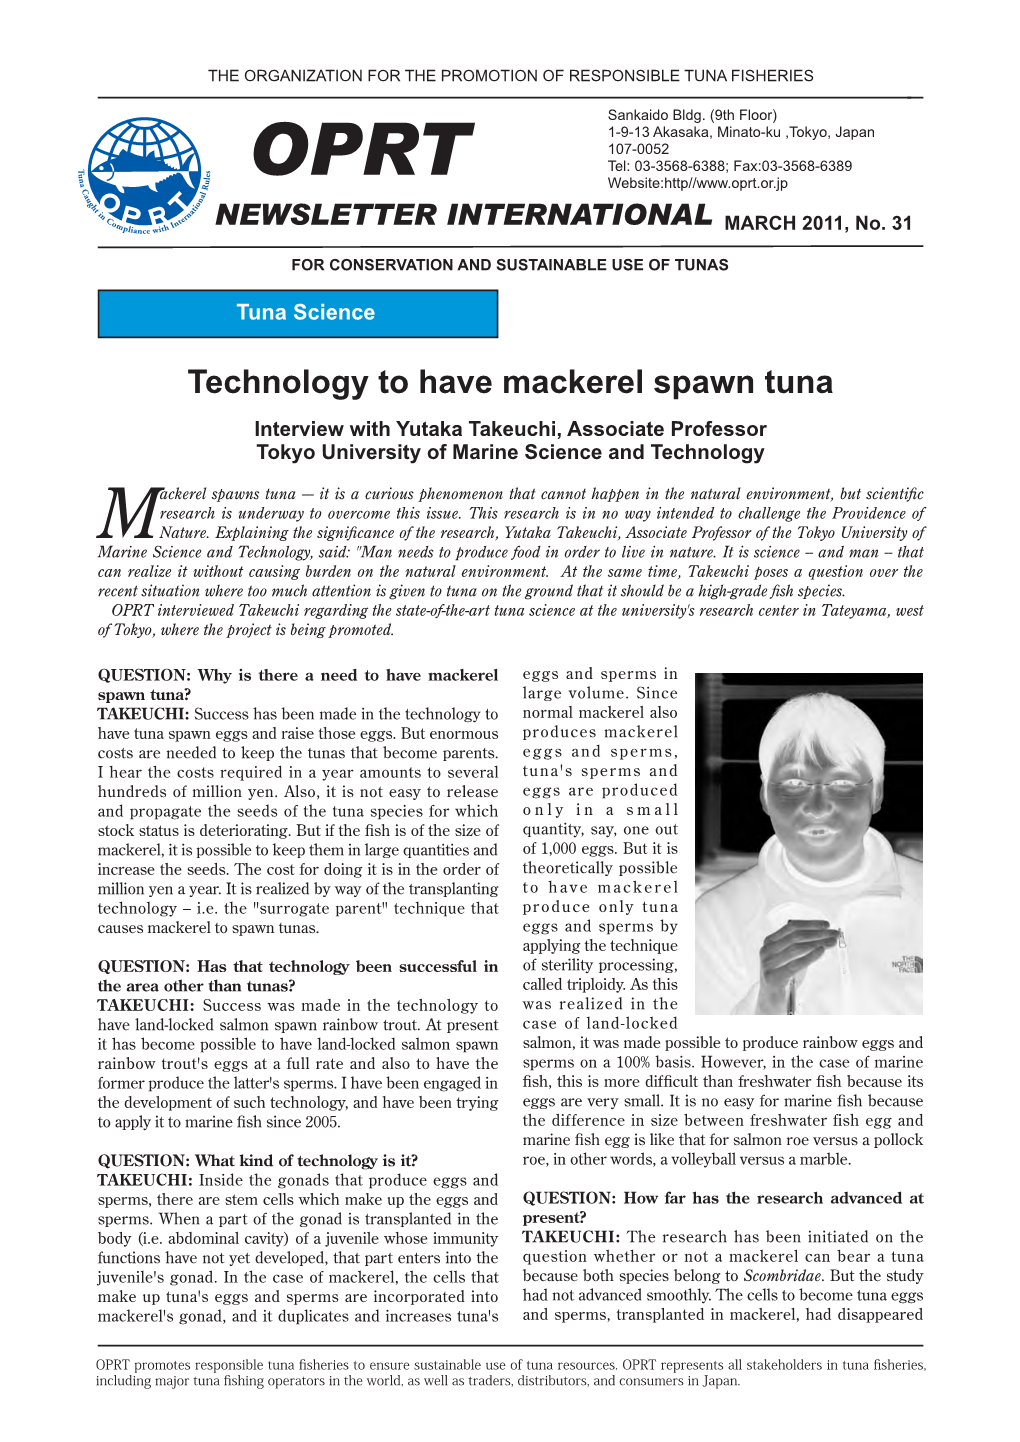 Technology to Have Mackerel Spawn Tuna Interview with Yutaka Takeuchi, Associate Professor Tokyo University of Marine Science and Technology